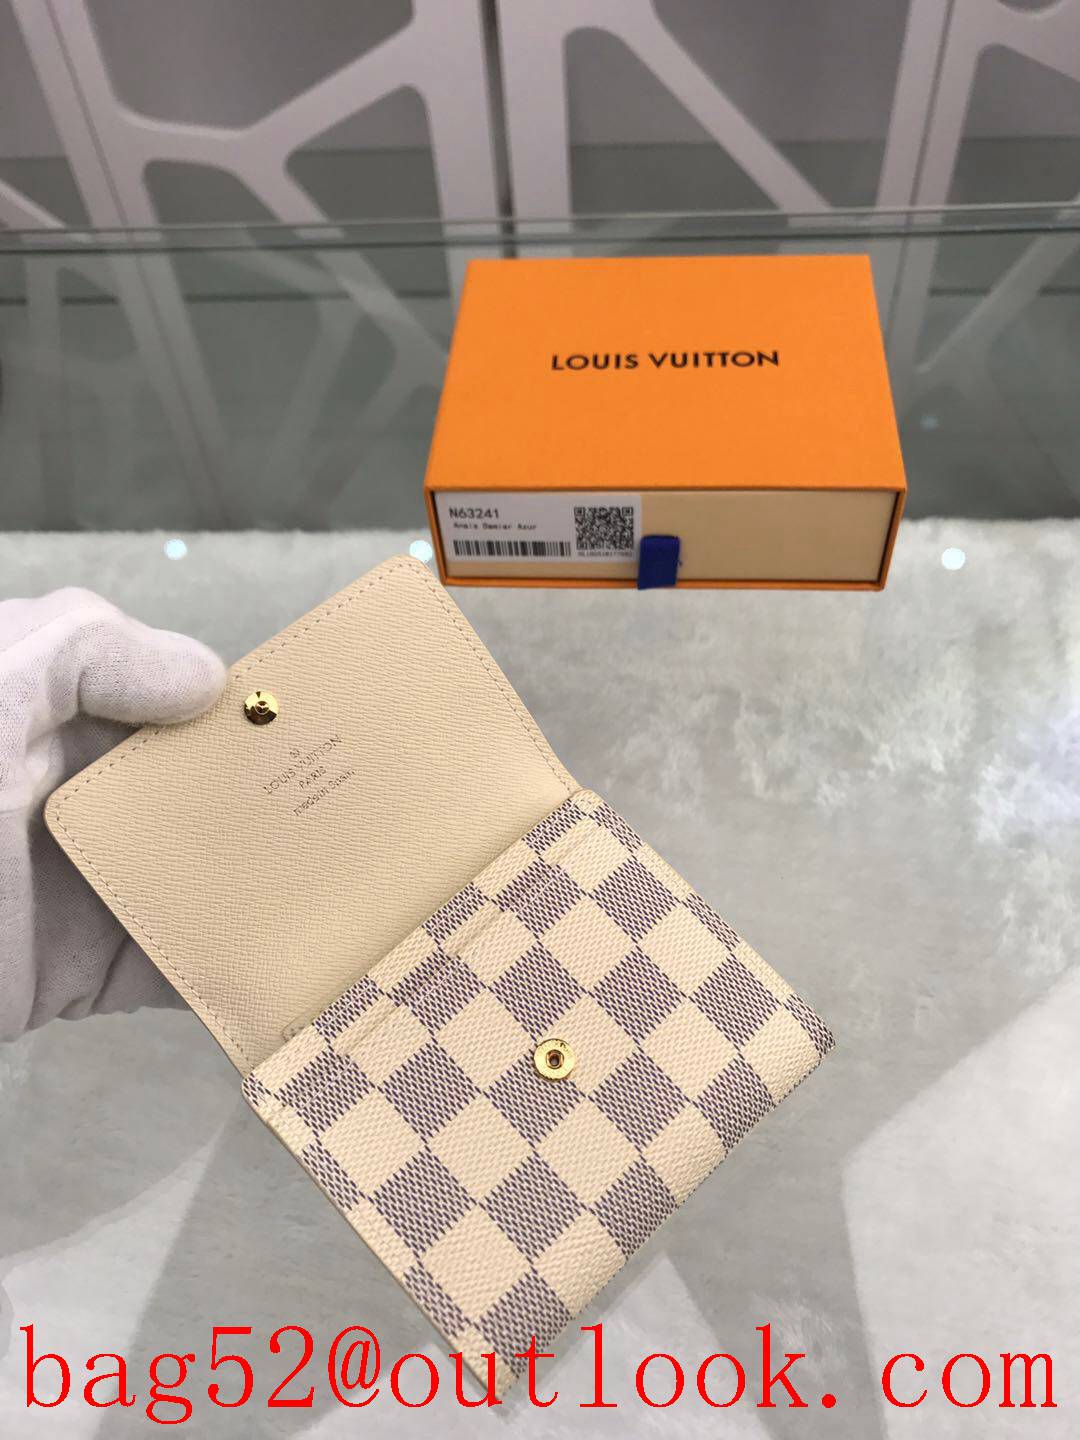 LV Louis Vuitton Anais white damier 3 folded wallet purse N63241